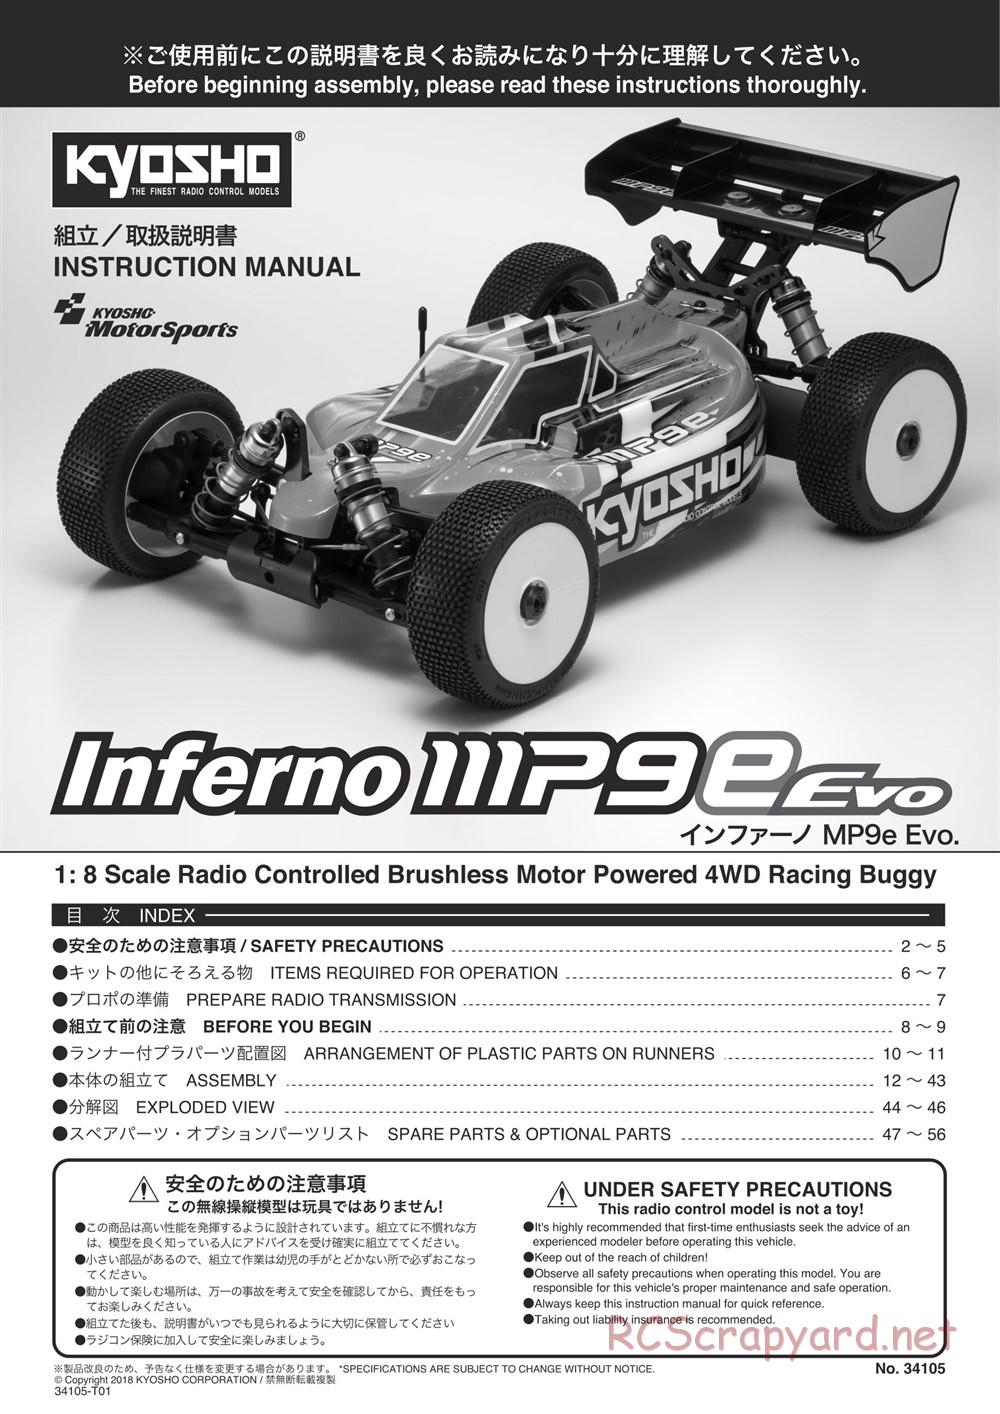 Kyosho - Inferno MP9e Evo - Manual - Page 1